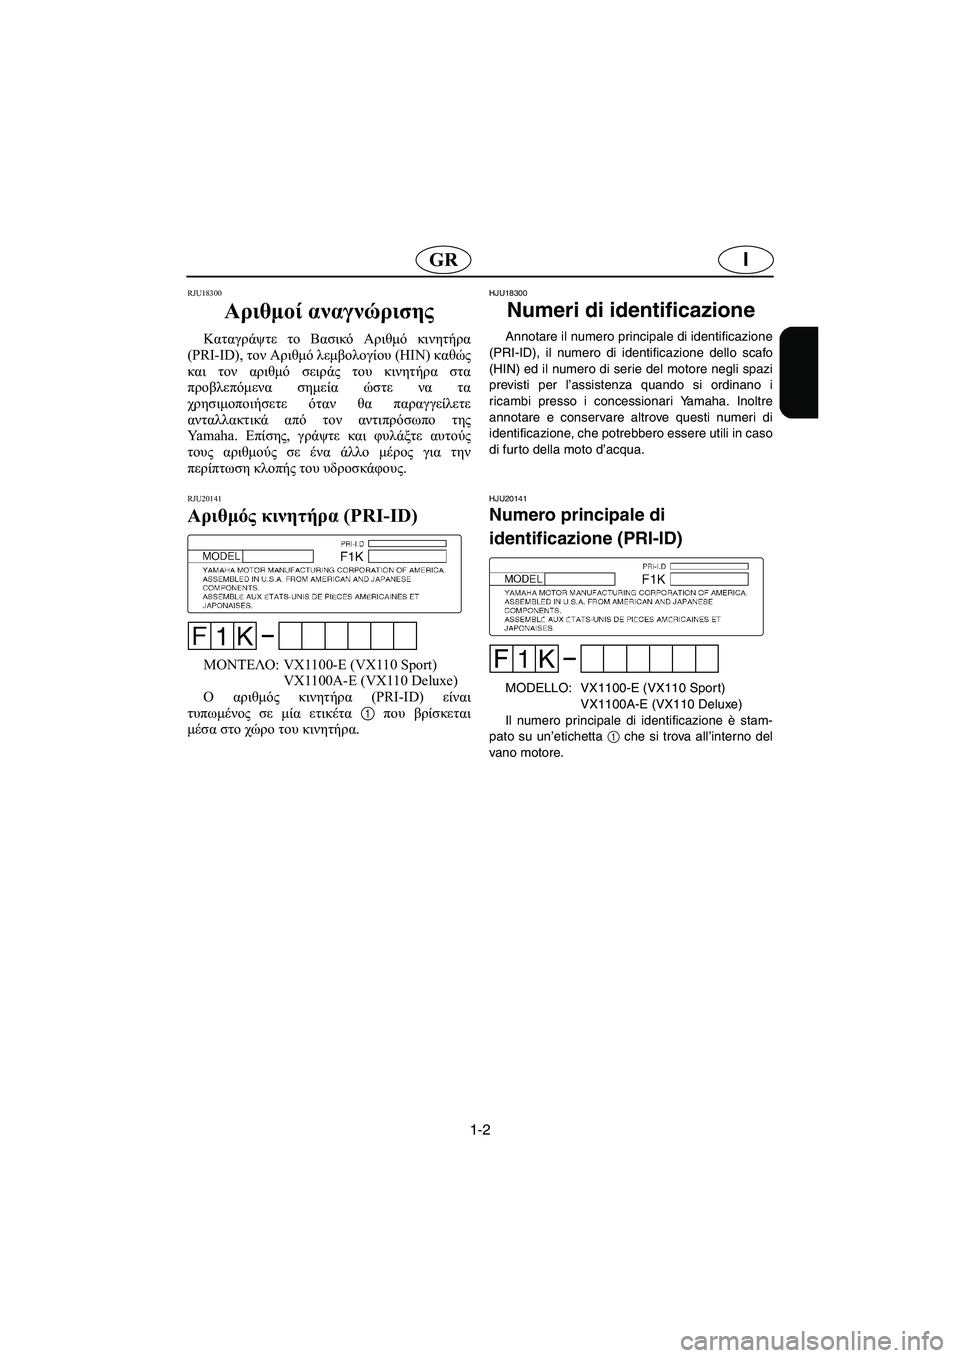 YAMAHA VX 2006  Manual de utilização (in Portuguese) 1-2
IGR
RJU18300 
Αριθμοί αναγνώρισης  
Καταγράψτε το Βασικό Αριθμό κινητήρα
(PRI-ID), τον Αριθμό λεμβολογίου (HIN) καθώς
κ�